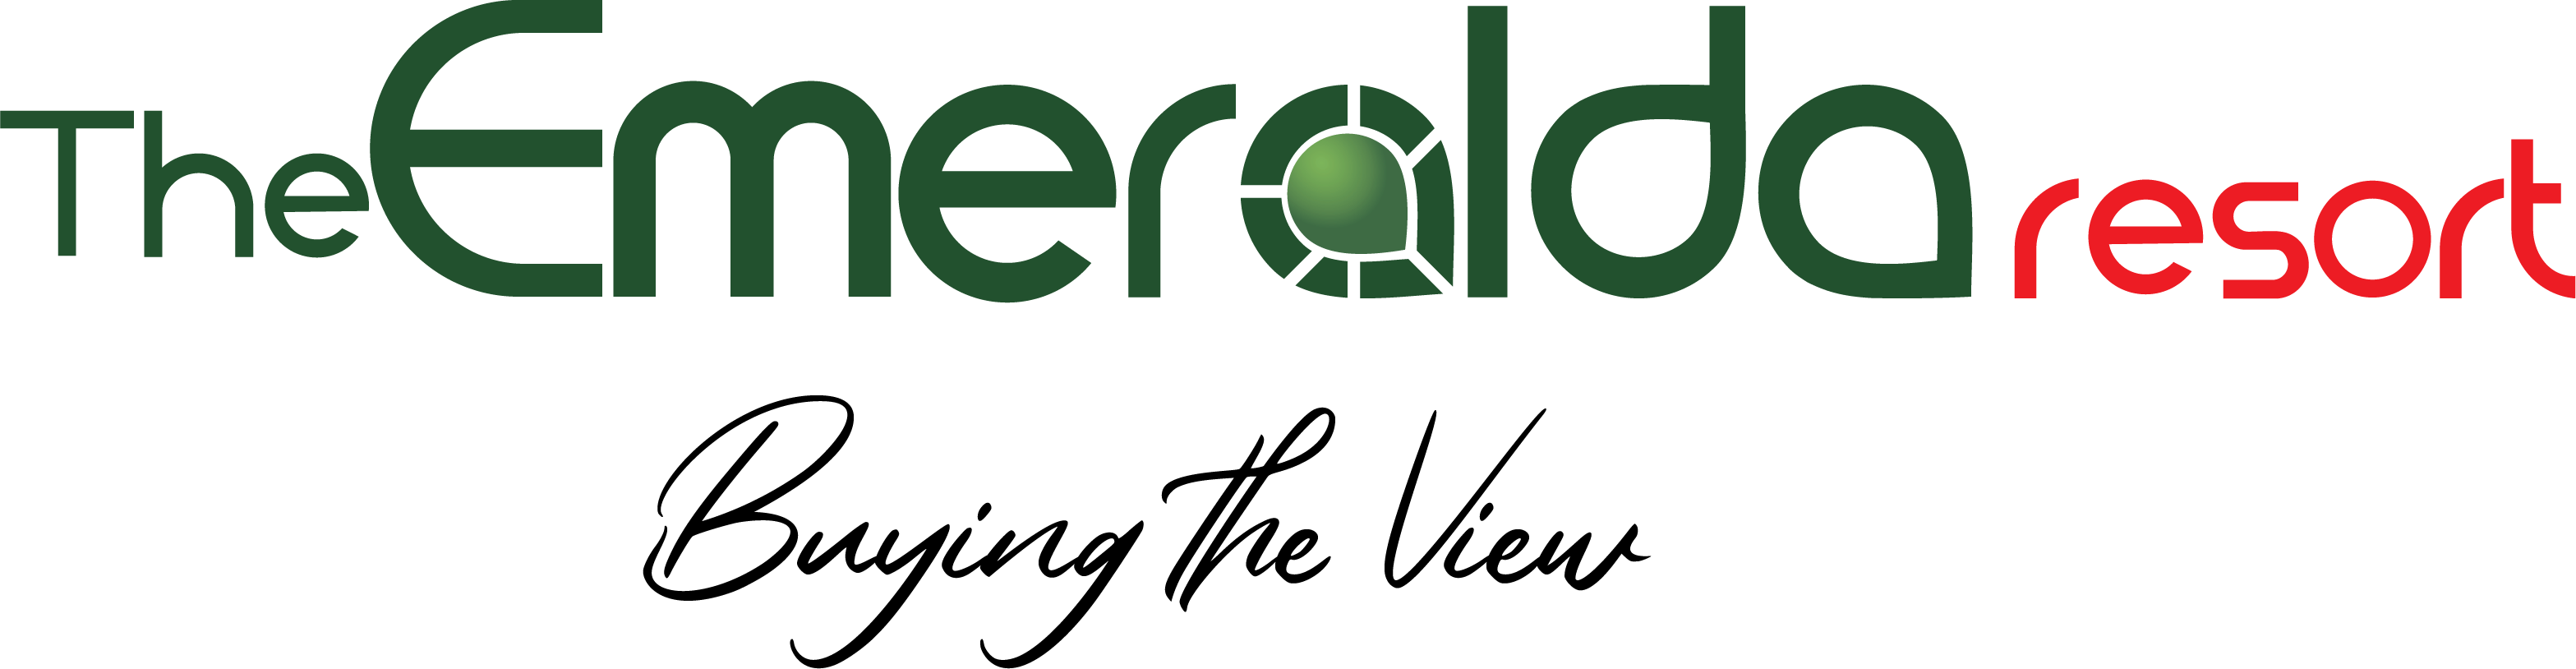 logo the emeralda resort